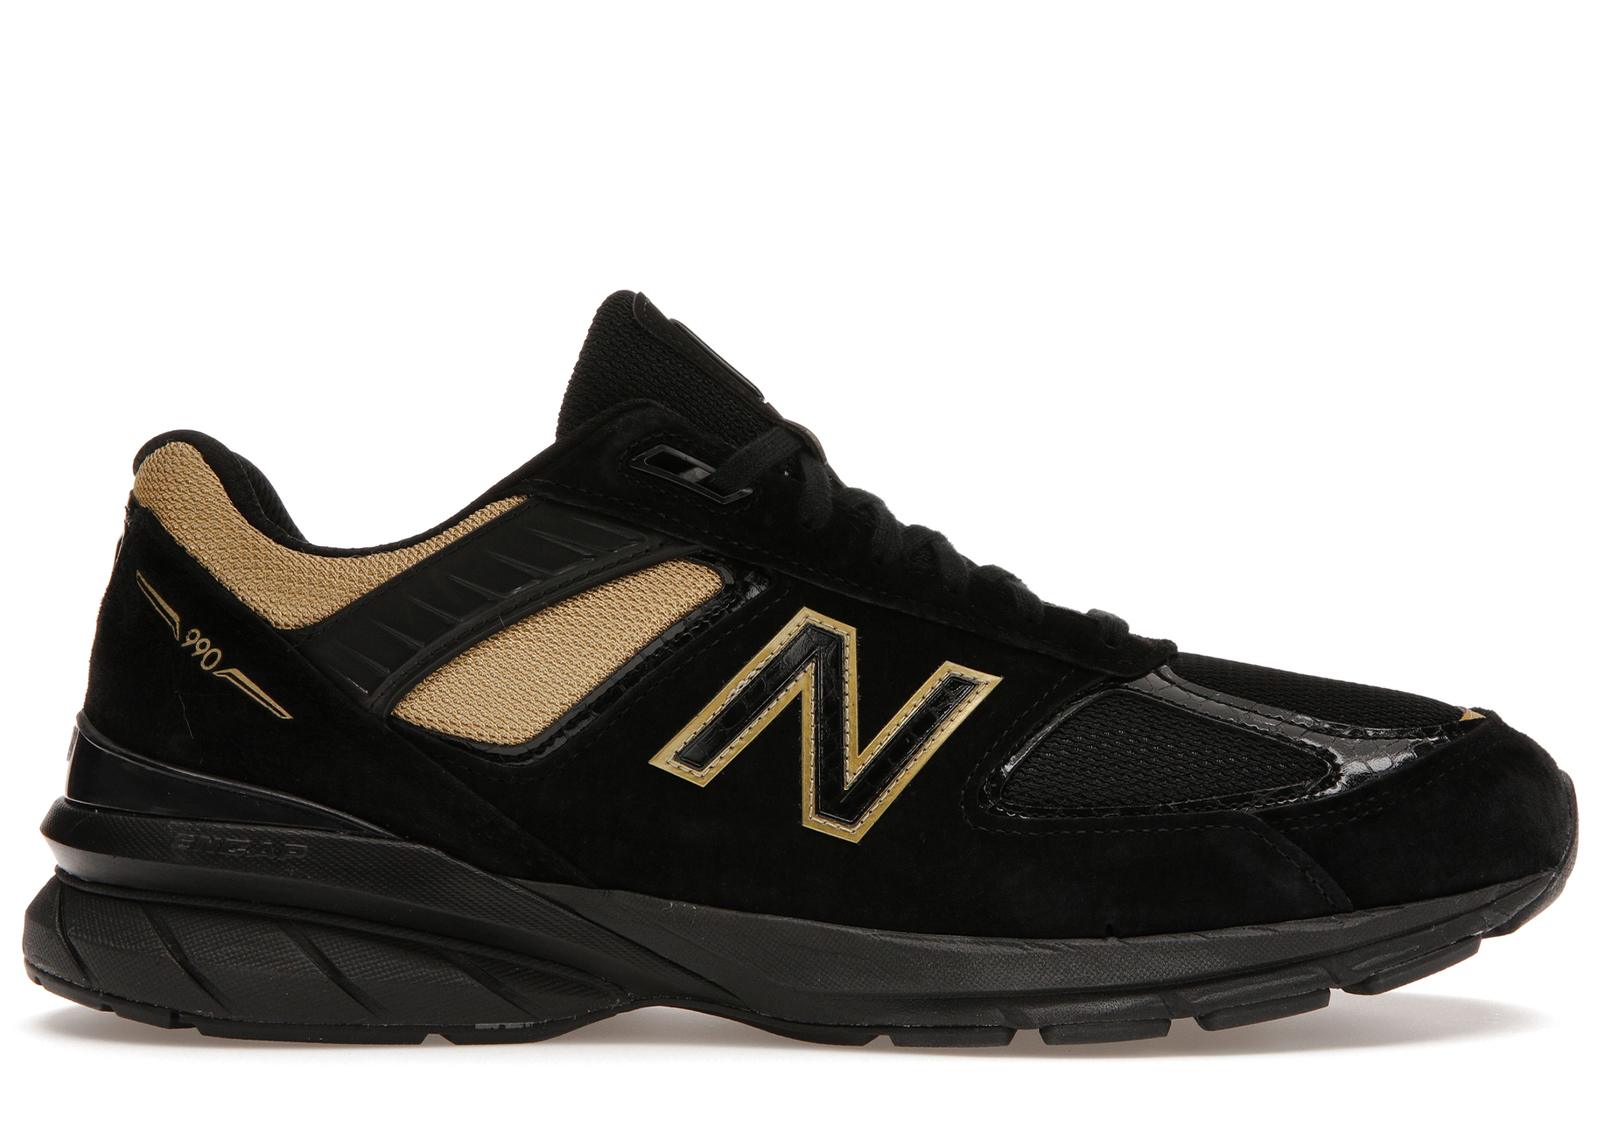 New Balance 990v5 Black/Gold Men's Shoes